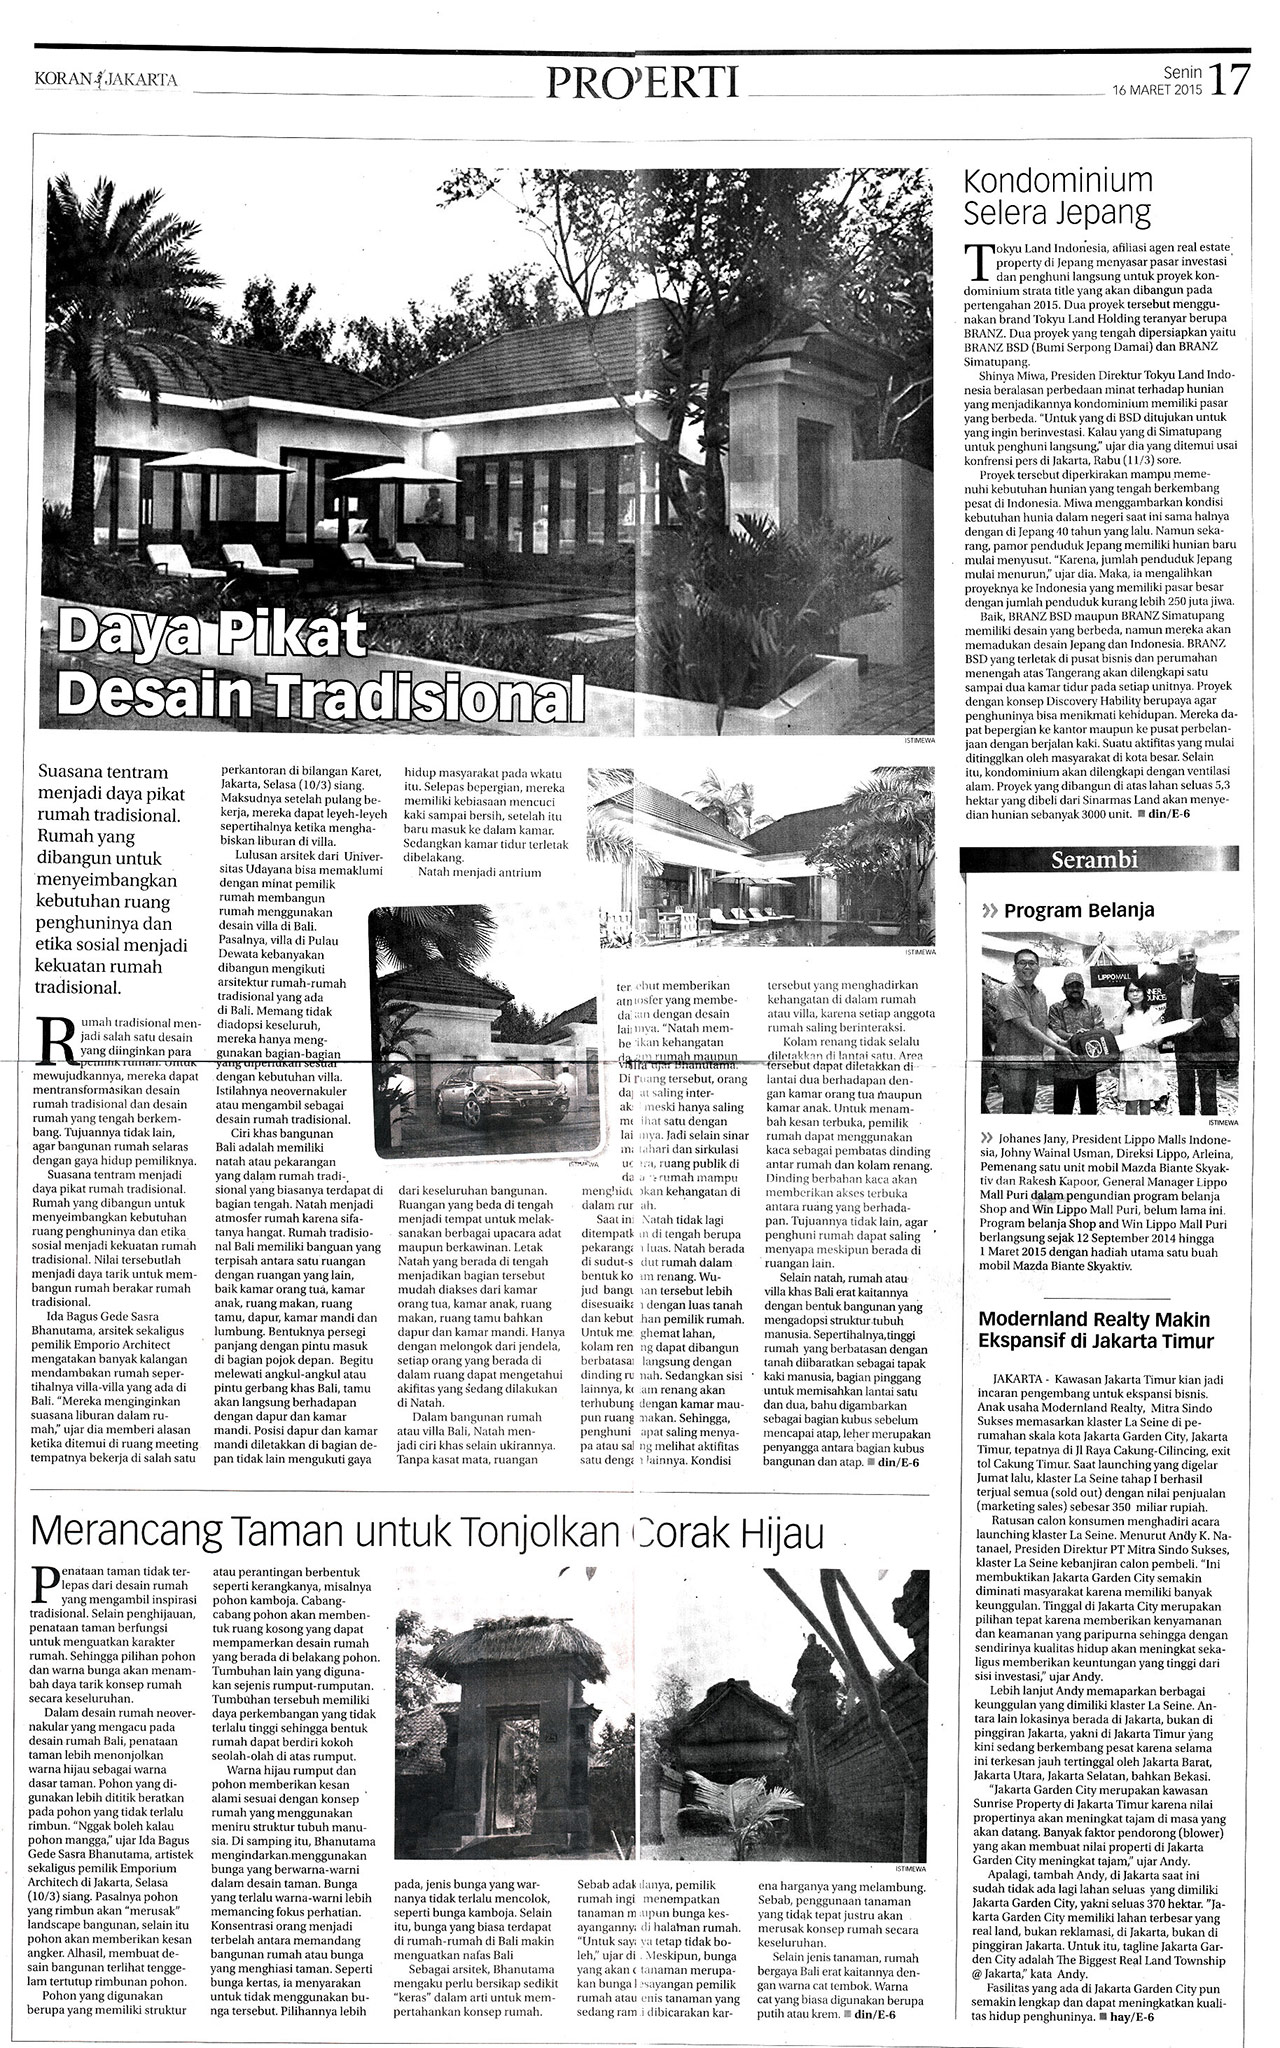 Koran Jakarta 1